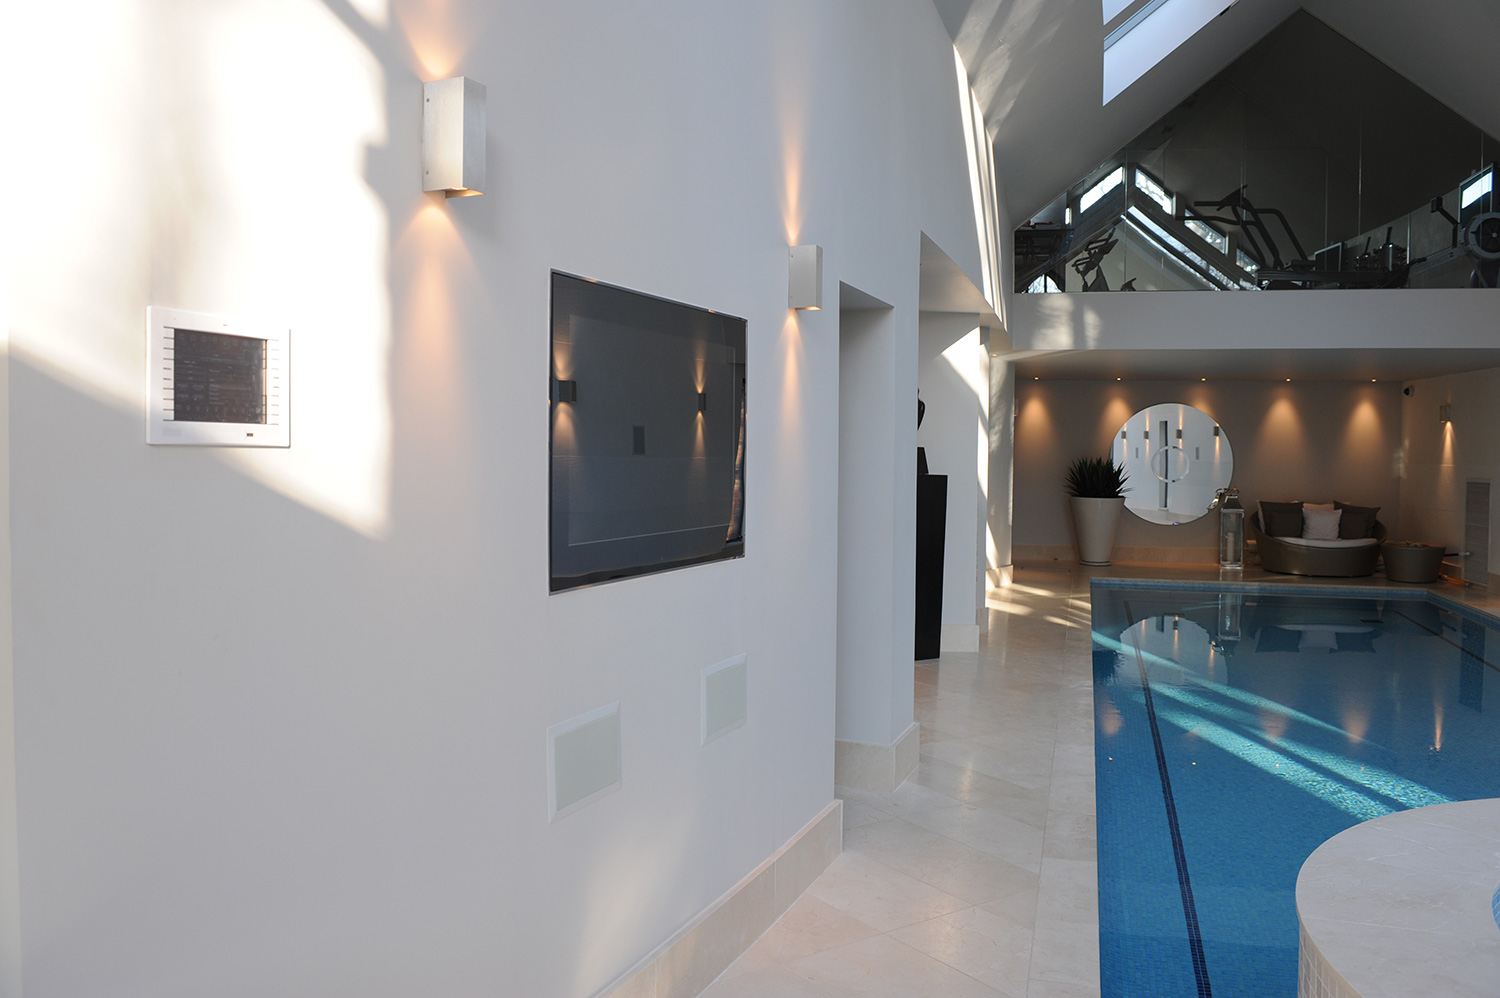 Plasma screen by indoor swimming pool